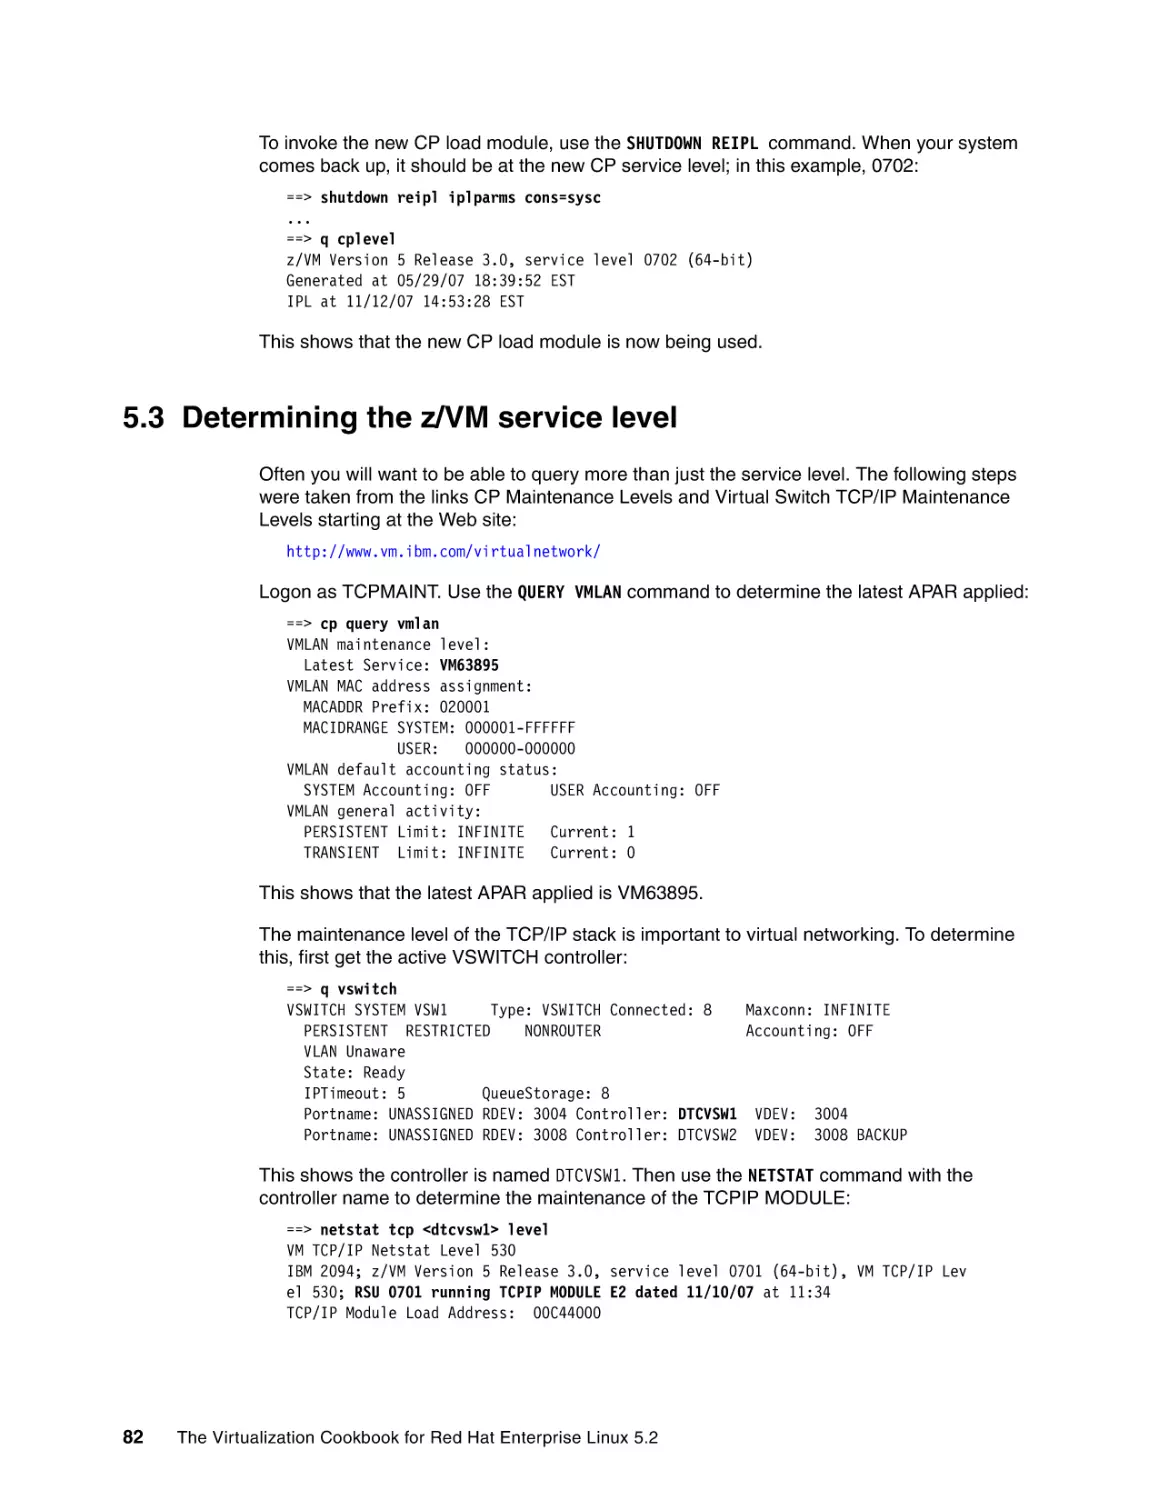 5.3 Determining the z/VM service level